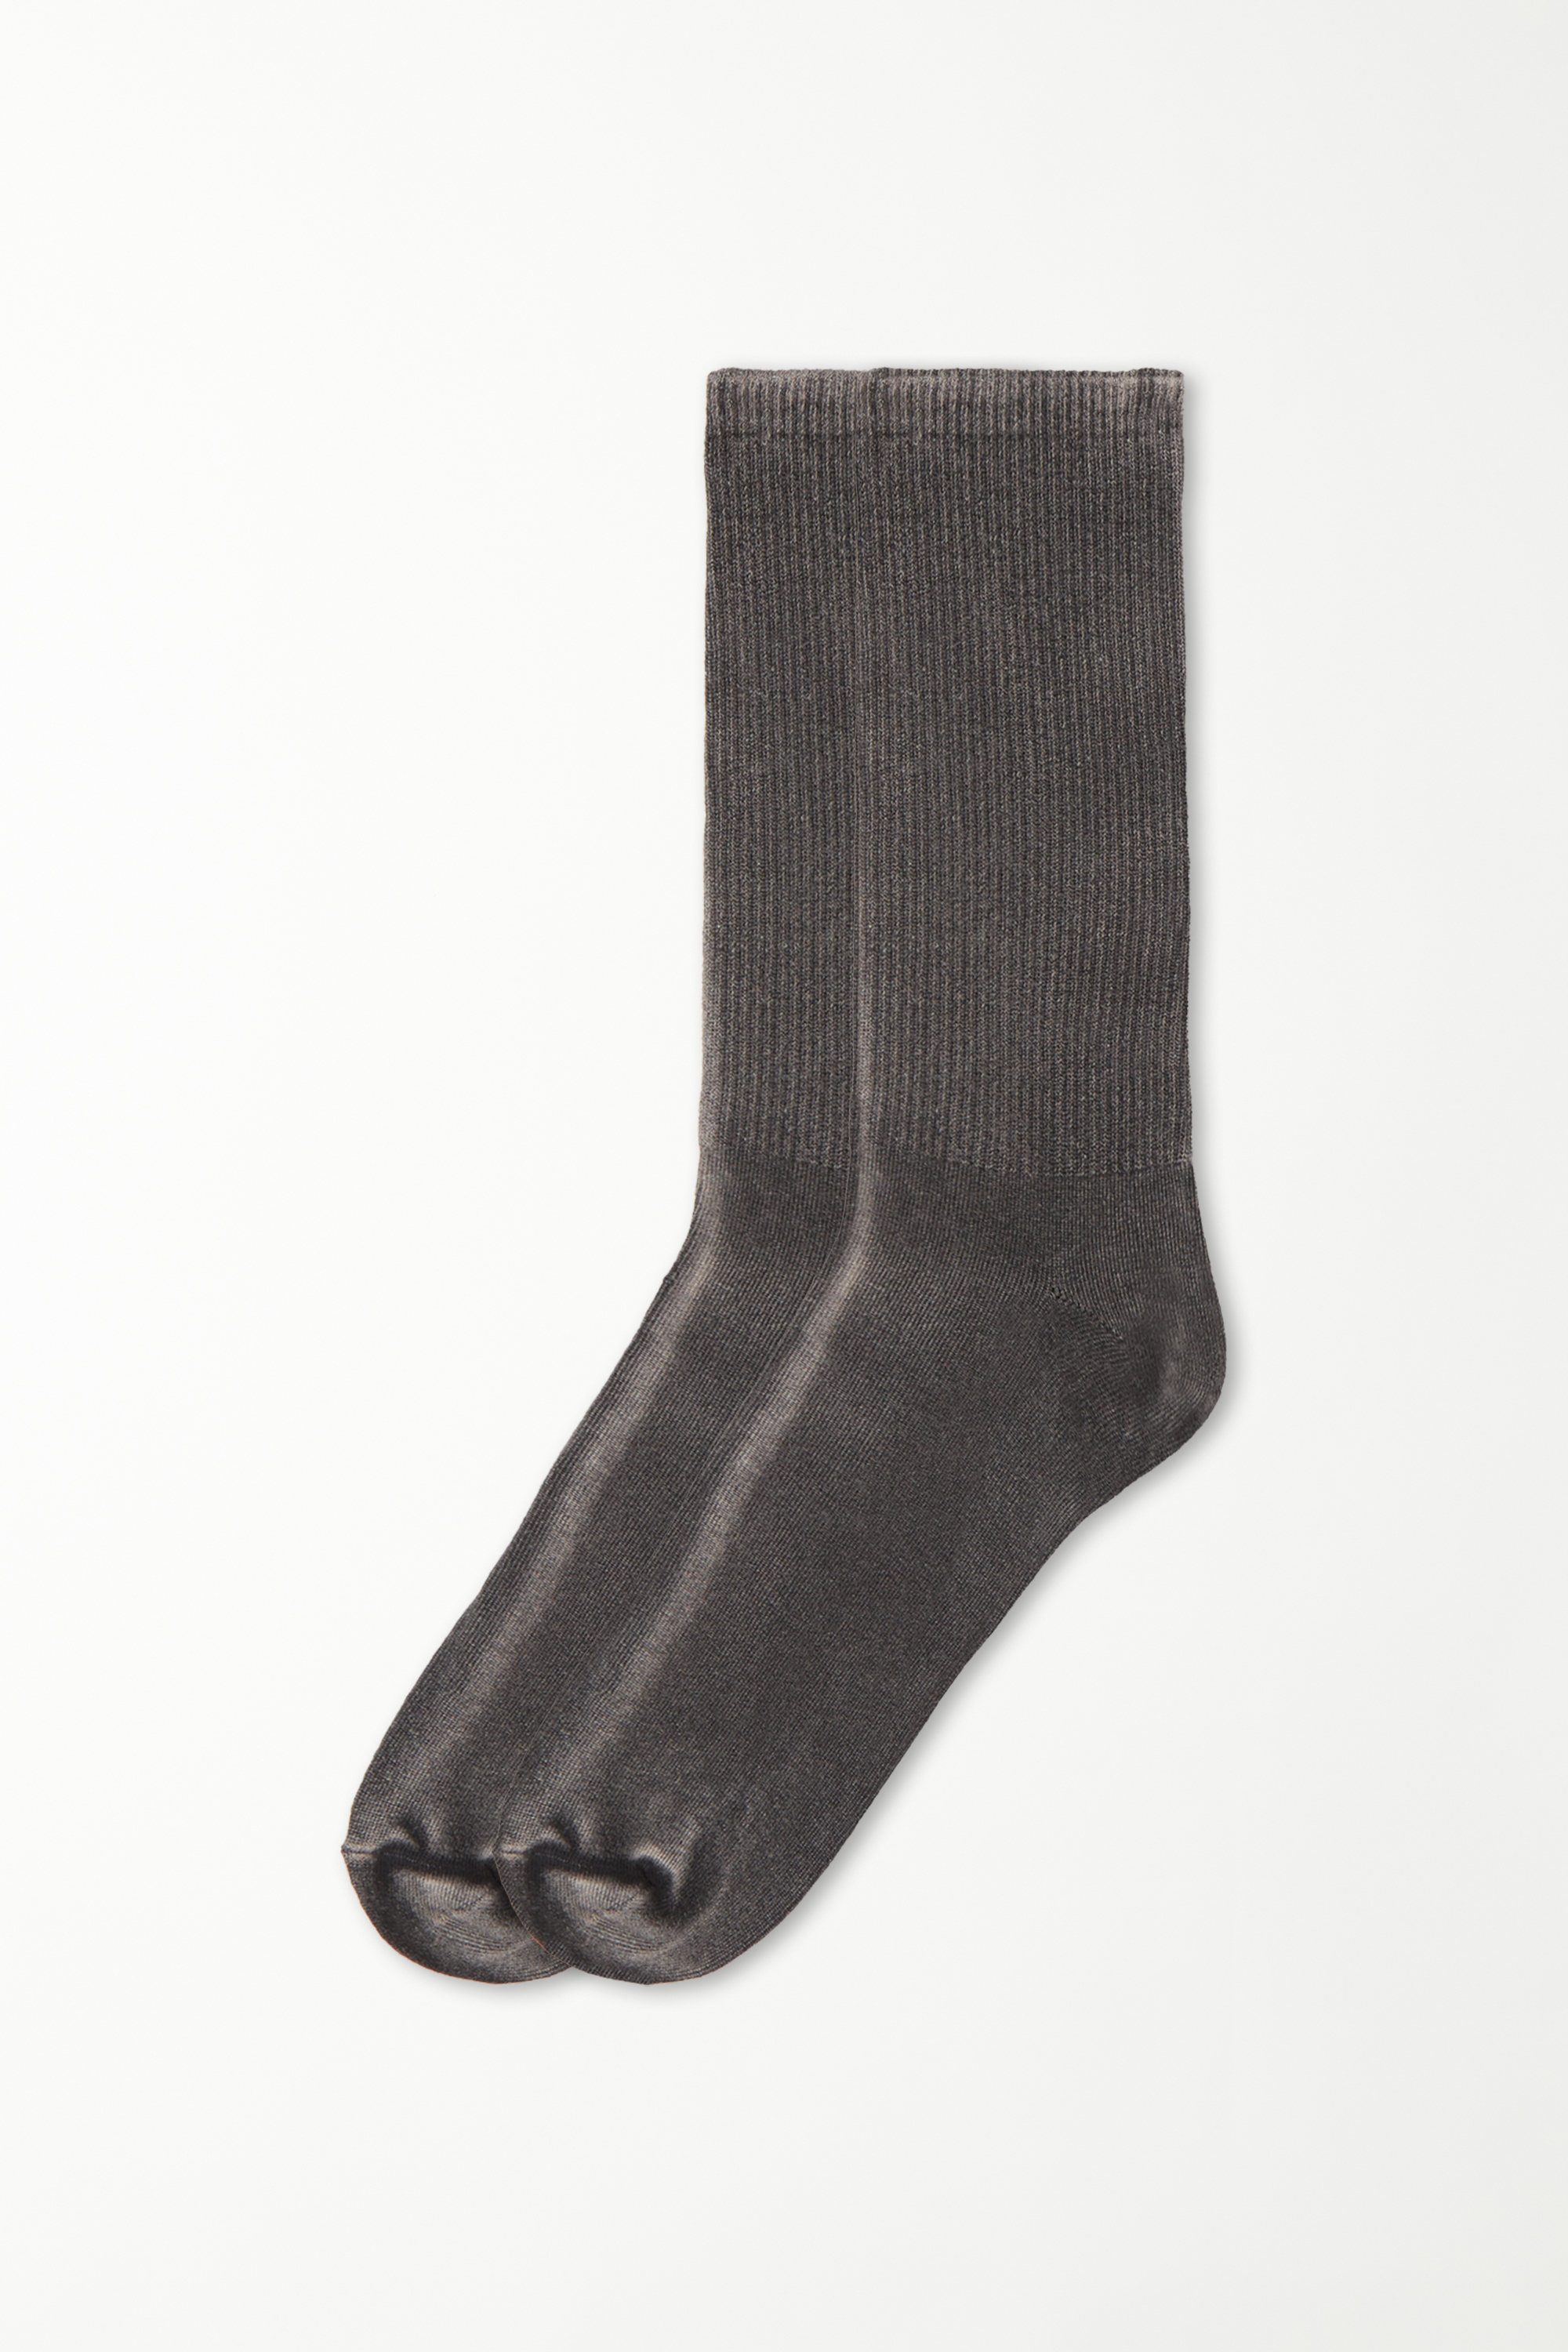 Men’s Semi-Short Patterned Cotton Socks